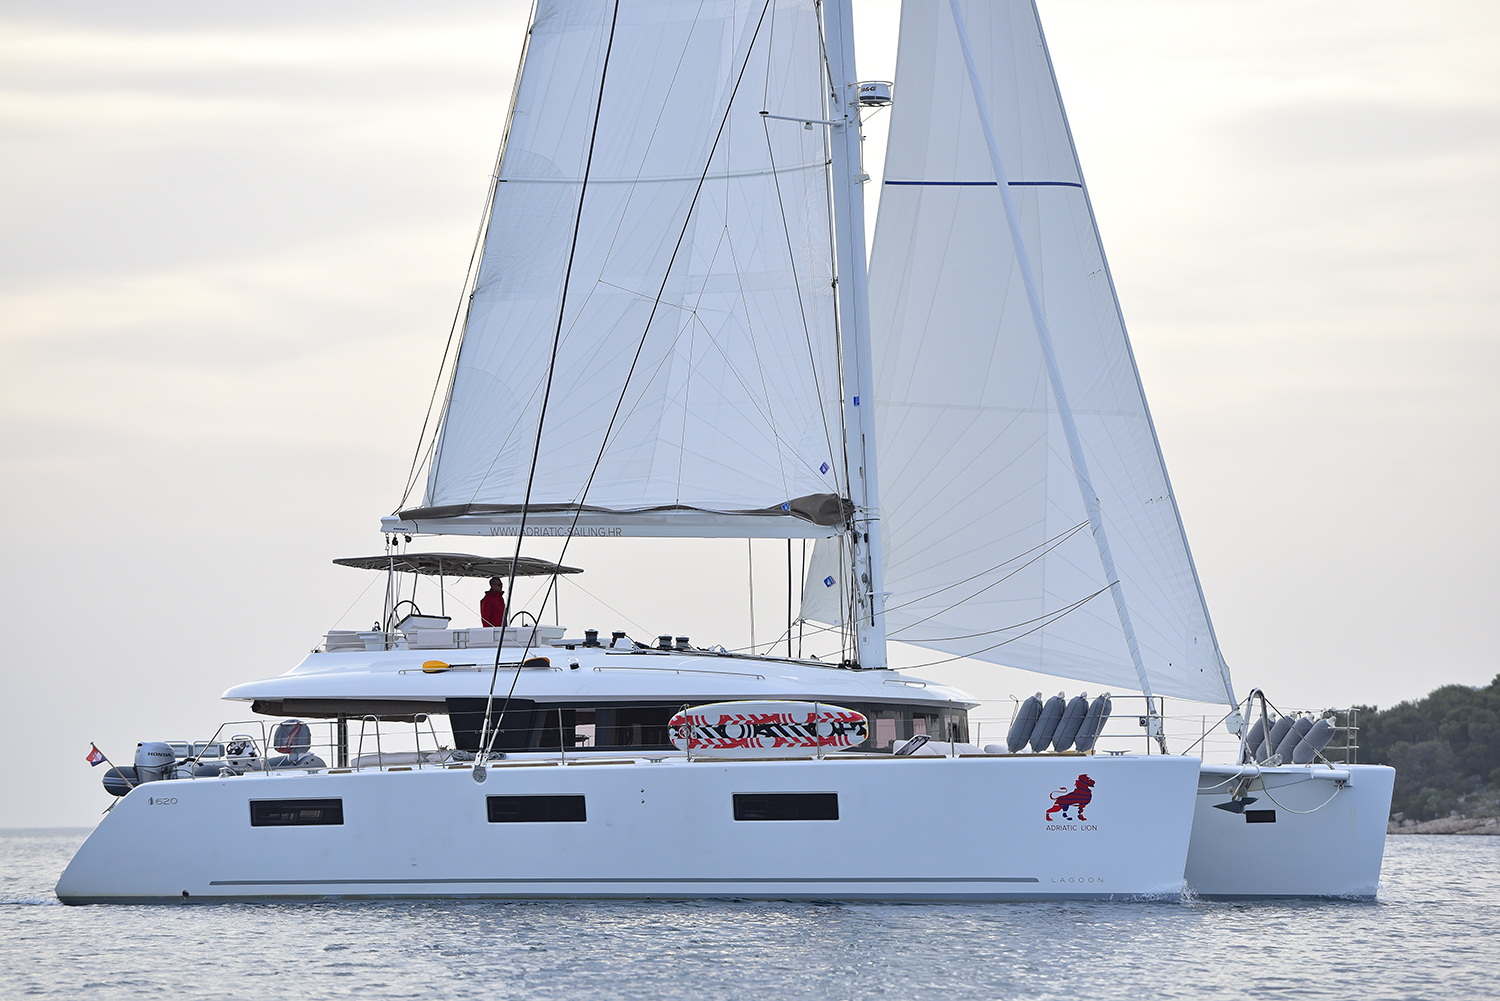 ADRIATIC LION Yacht Charter Details, Lagoon 620 CHARTERWORLD Luxury